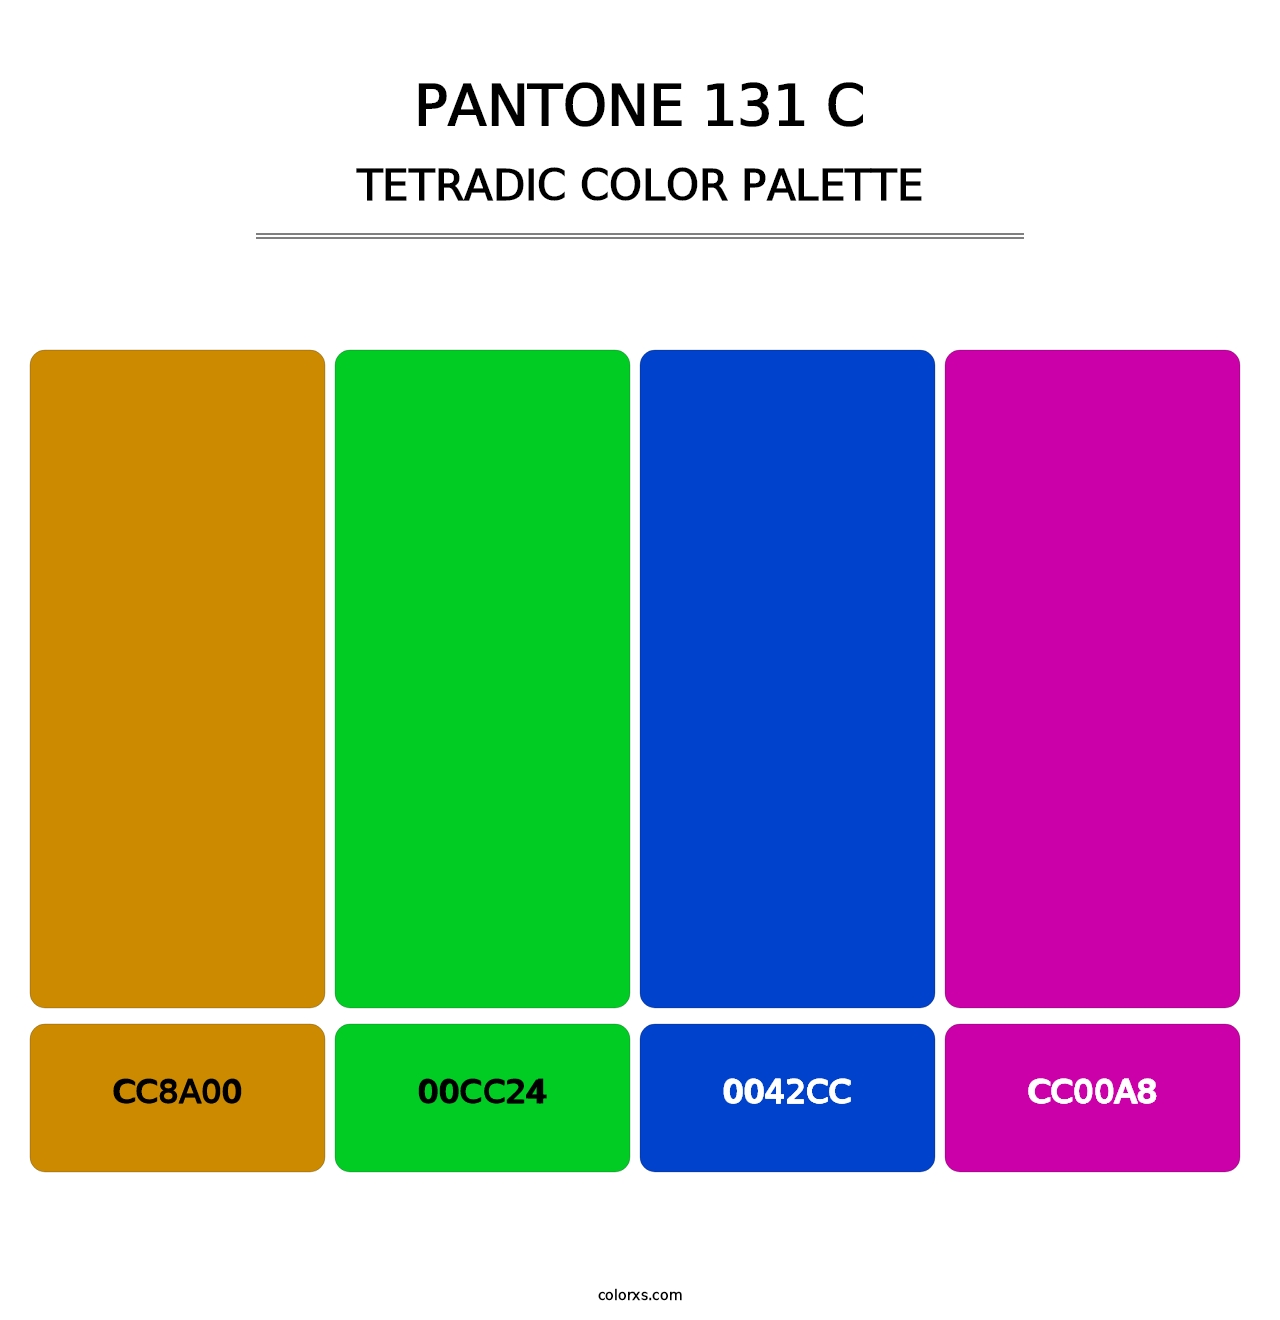 PANTONE 131 C - Tetradic Color Palette